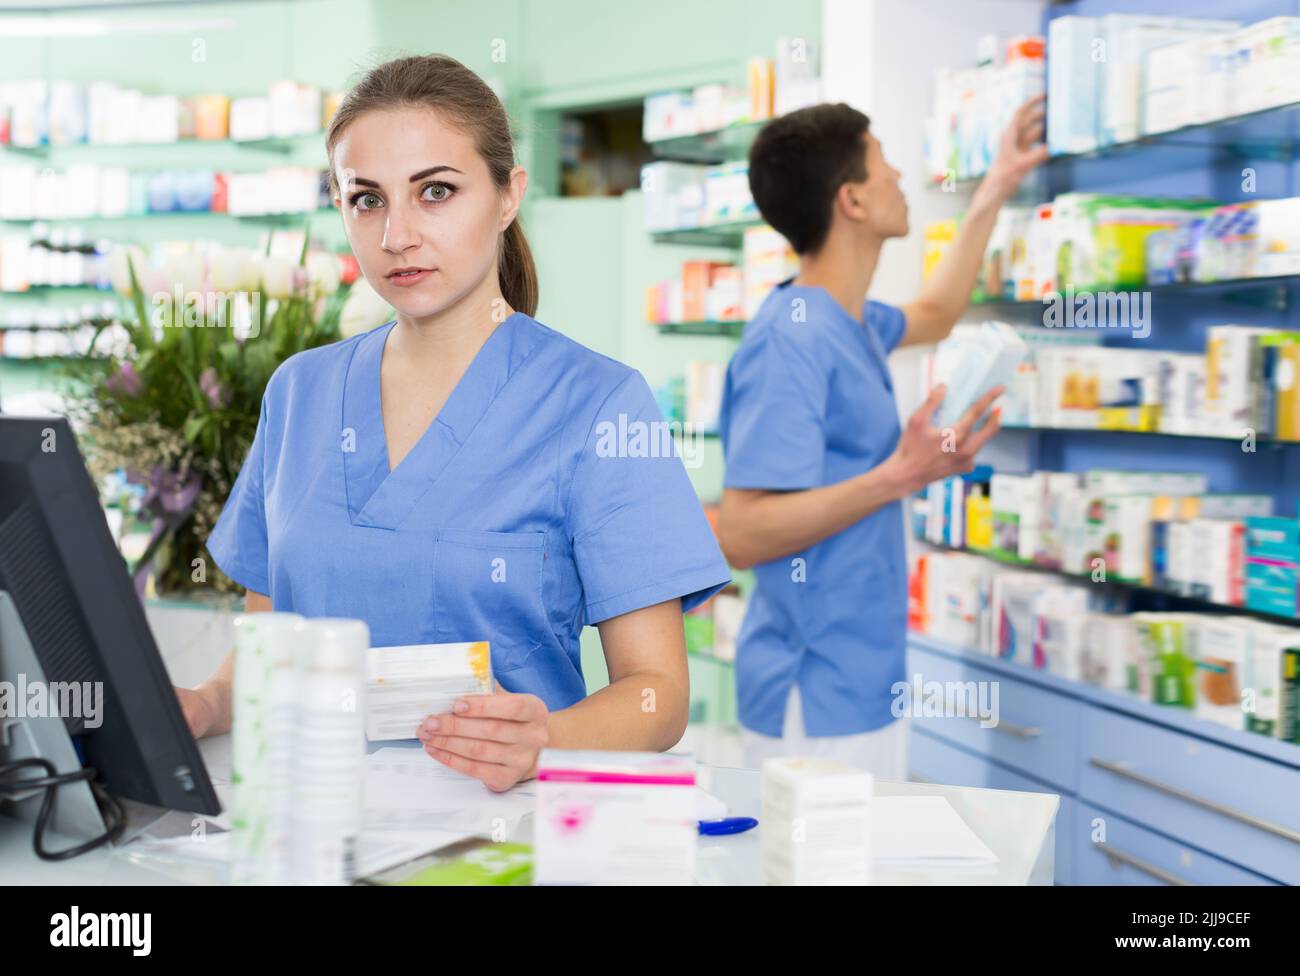 Adult pharmacist is standing near cashbox Stock Photo